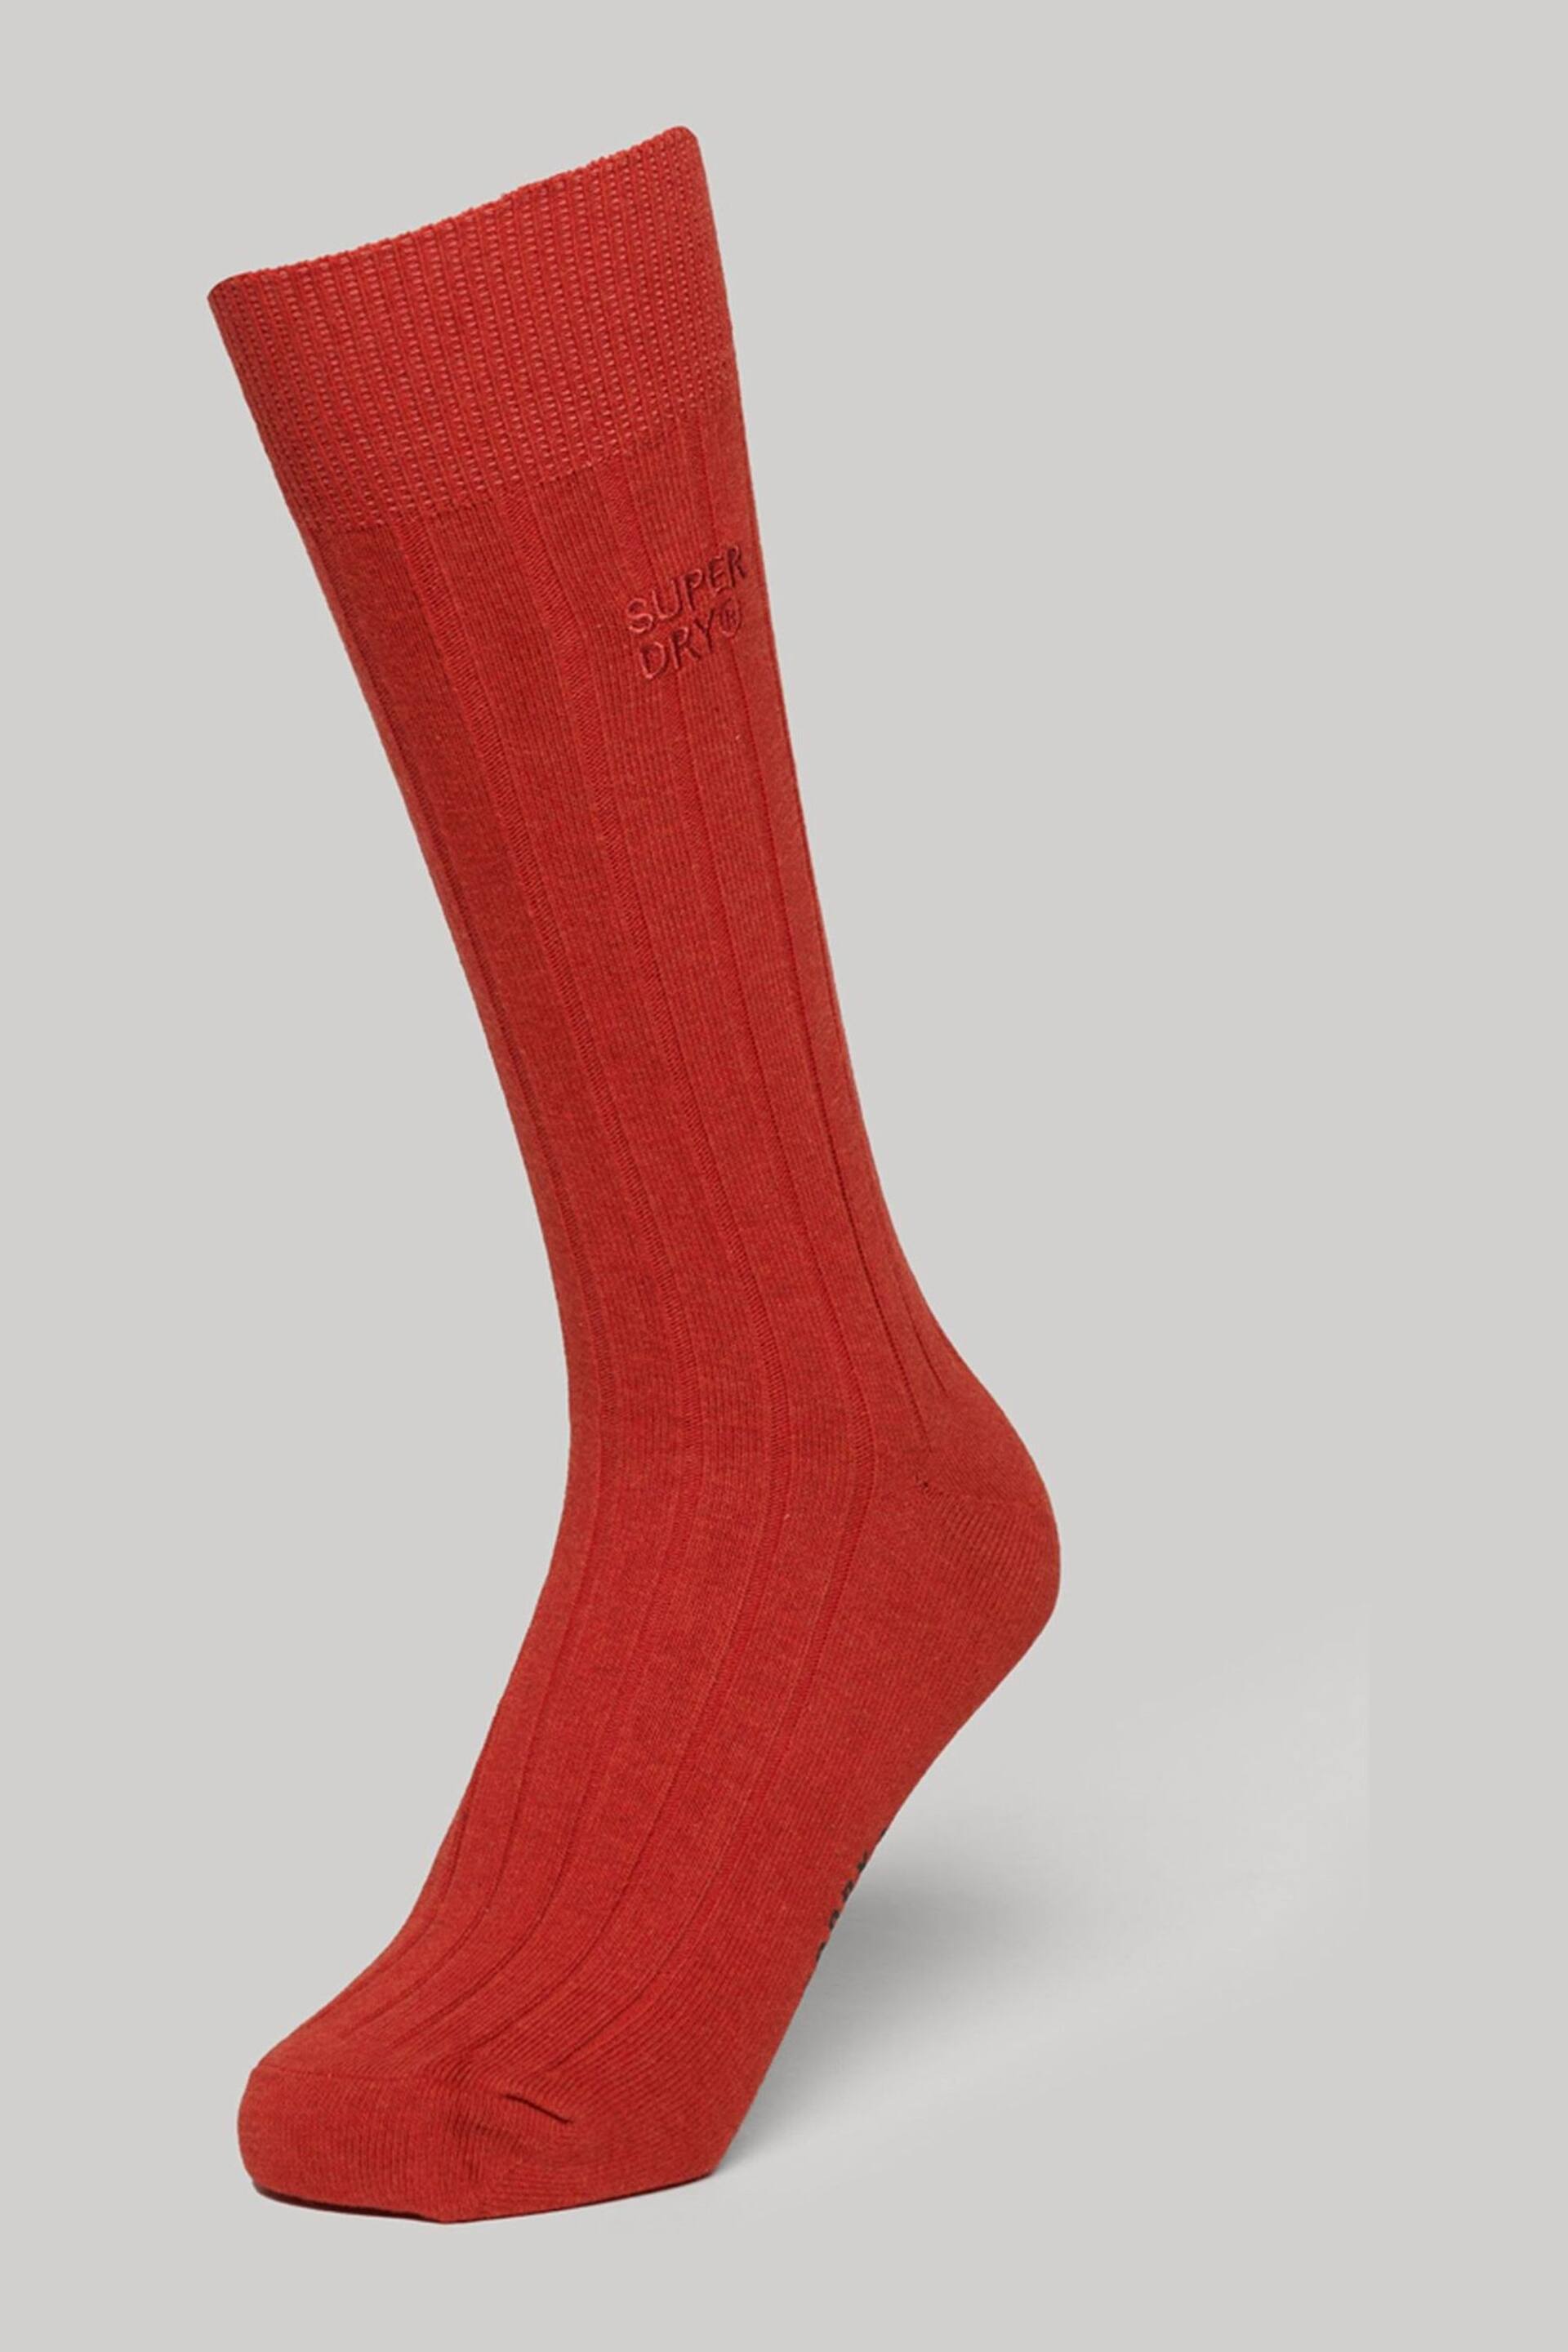 Superdry Red Organic Cotton Unisex Core Rib Crew Socks 3 Pack - Image 4 of 5